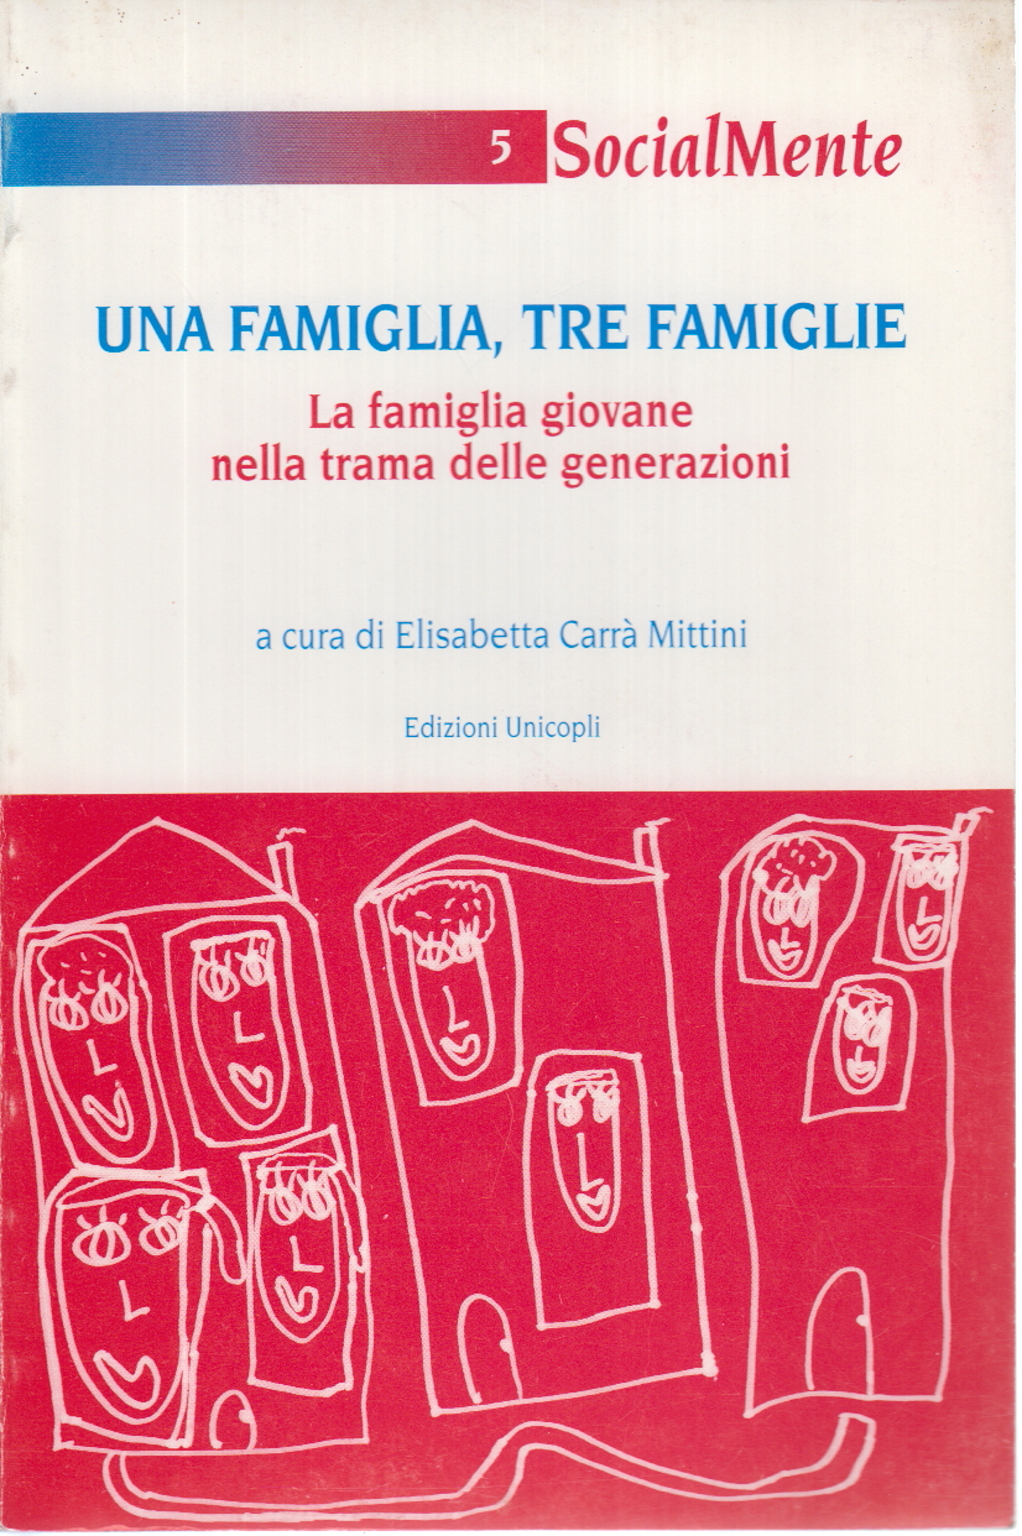 A family of three families, Elisabetta Carrà Mittini